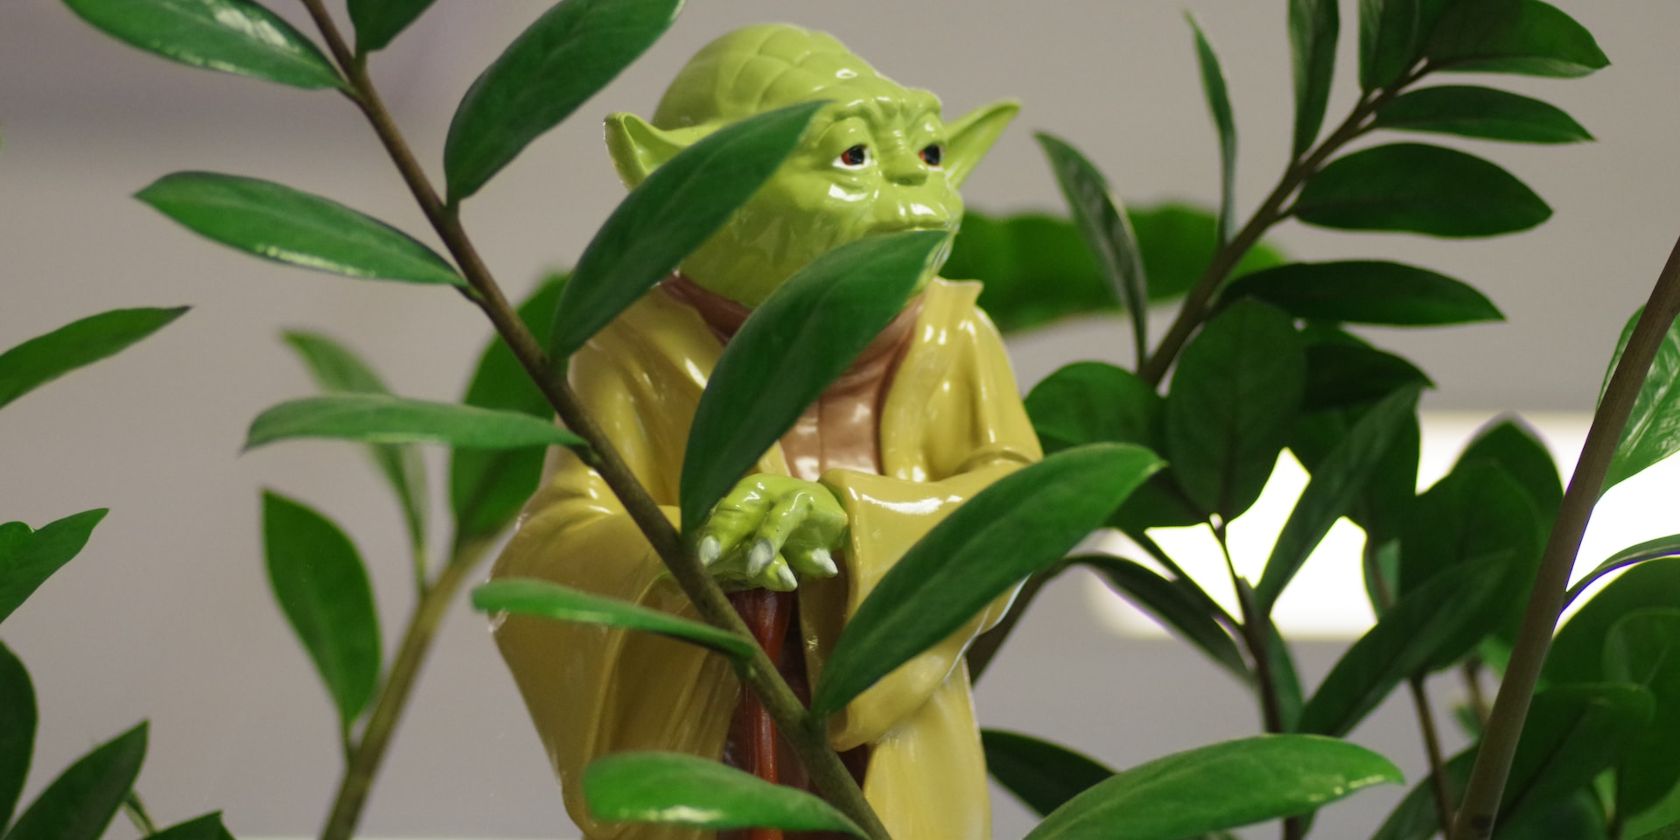 Yoda Figurine Hiding Behind Leaves